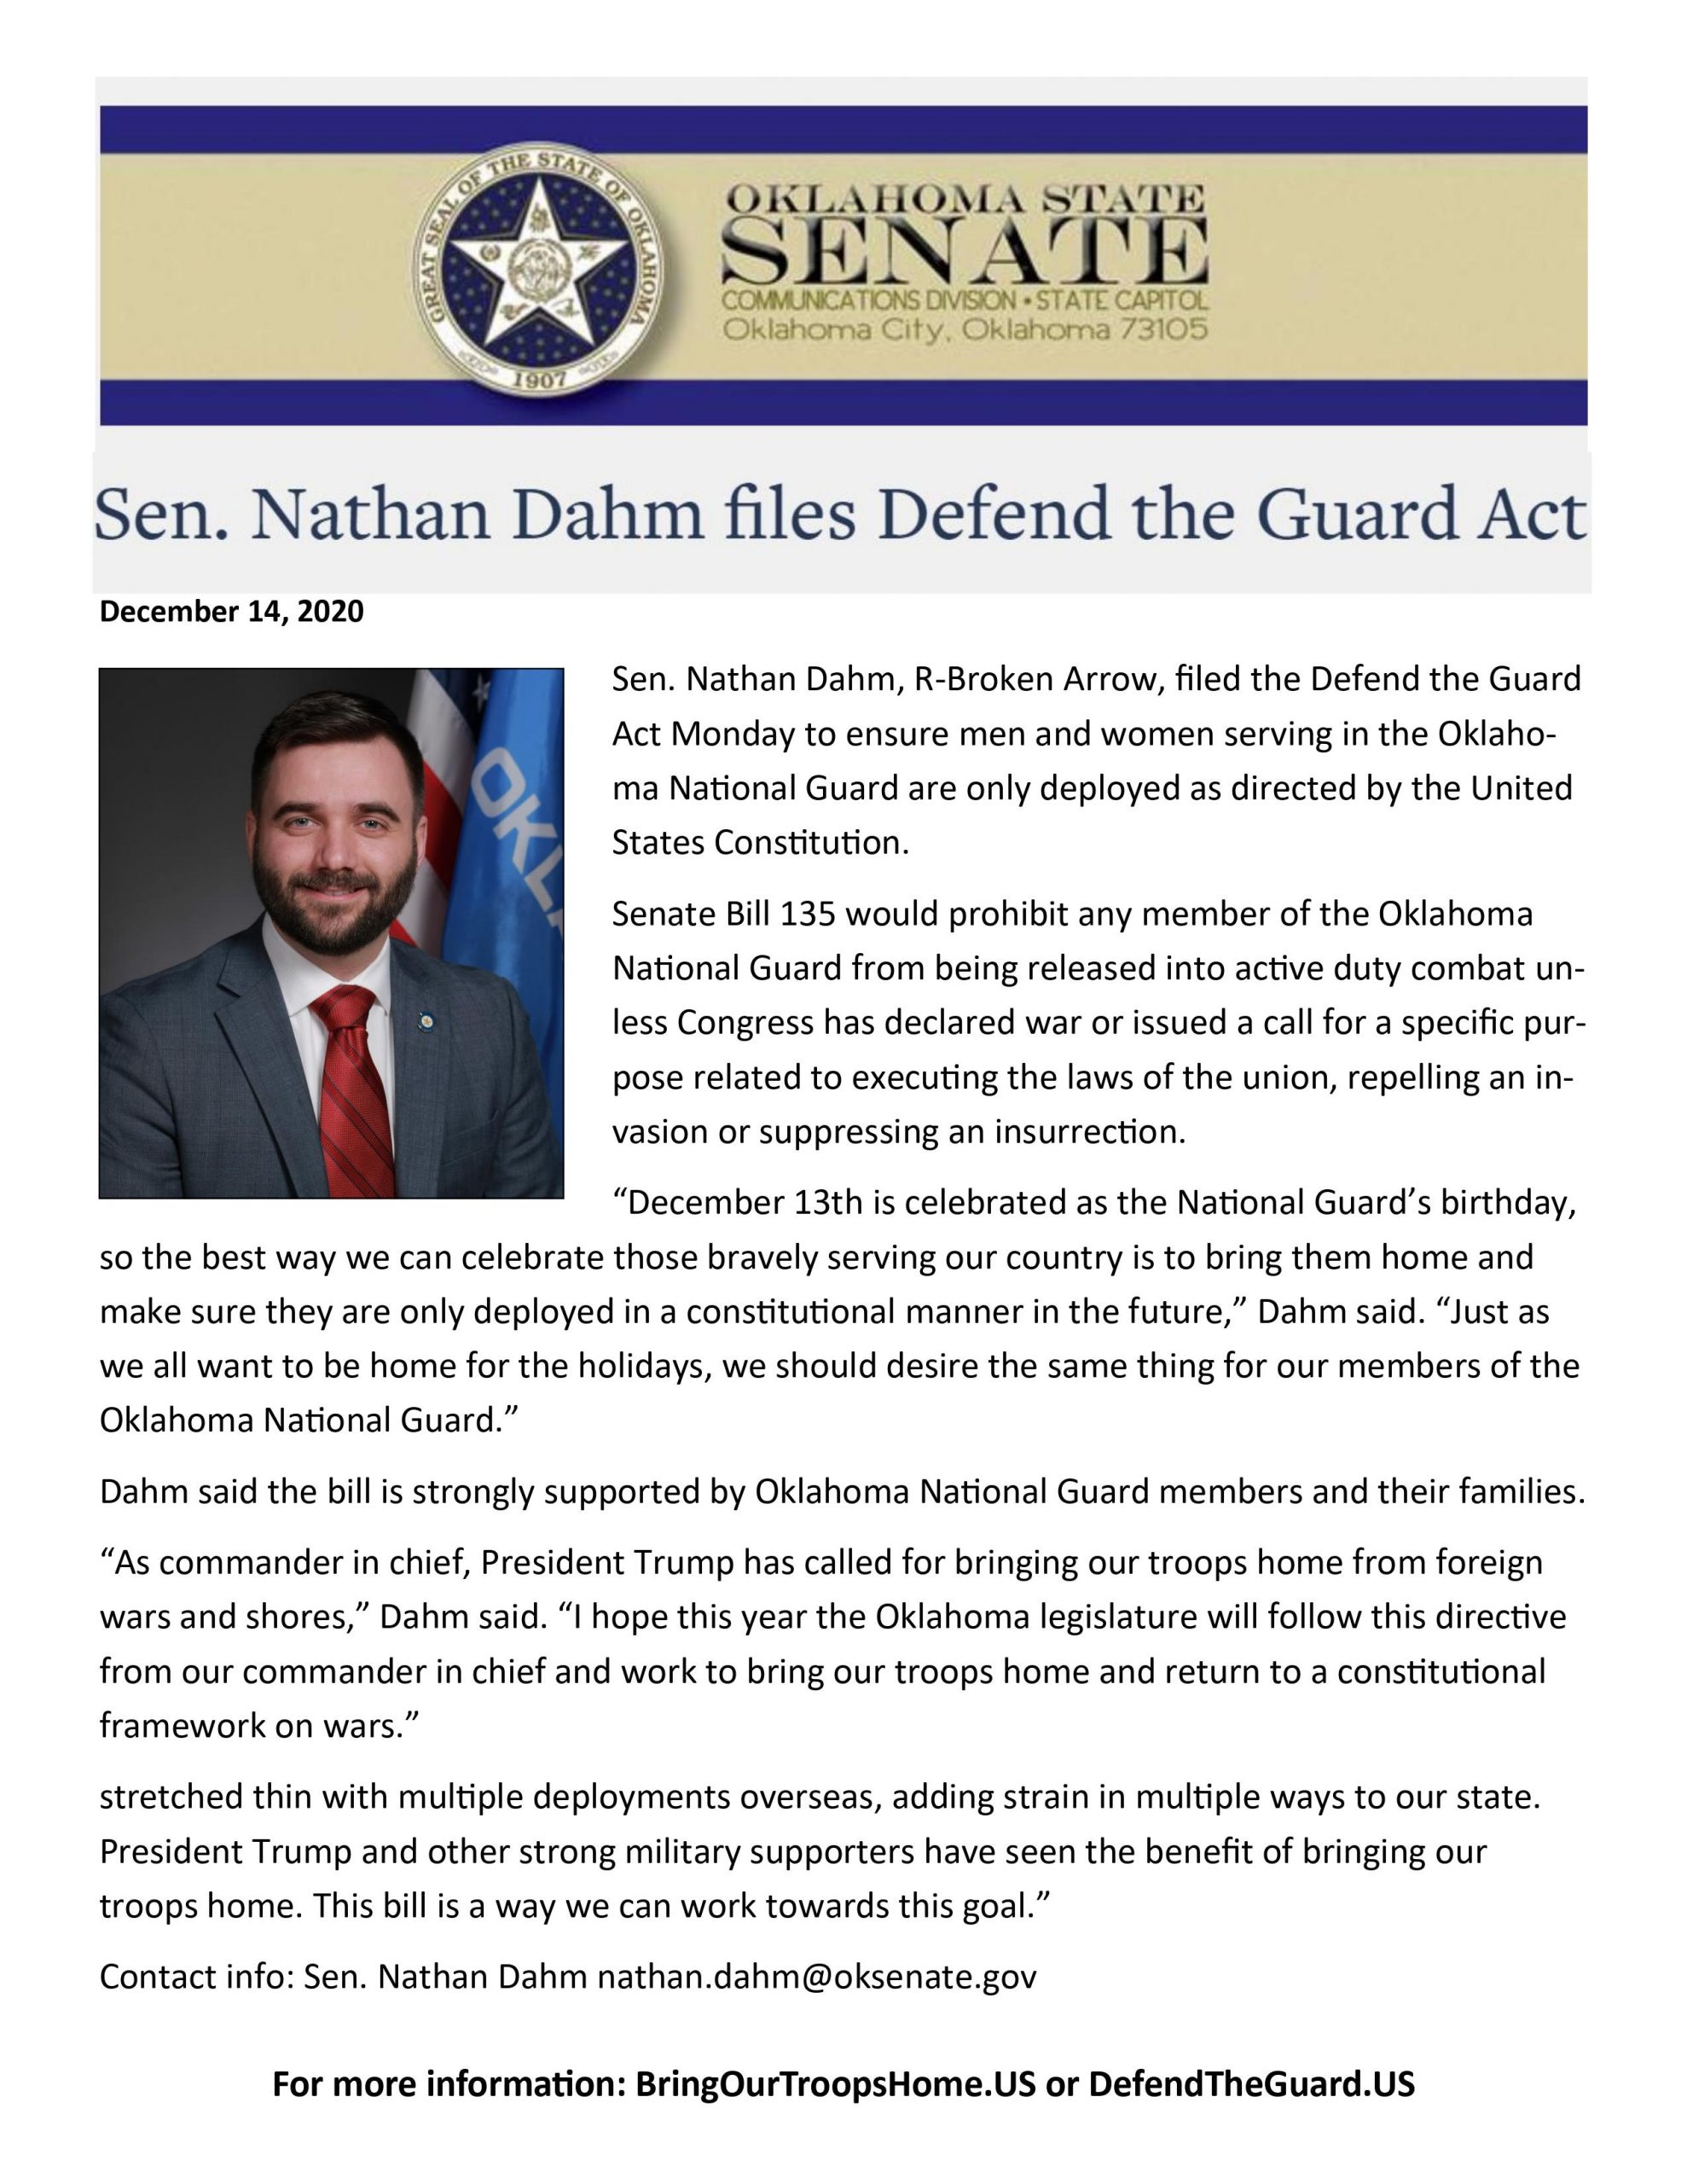 Sen. Nathan Dahm Introduces Defend the Guard Act